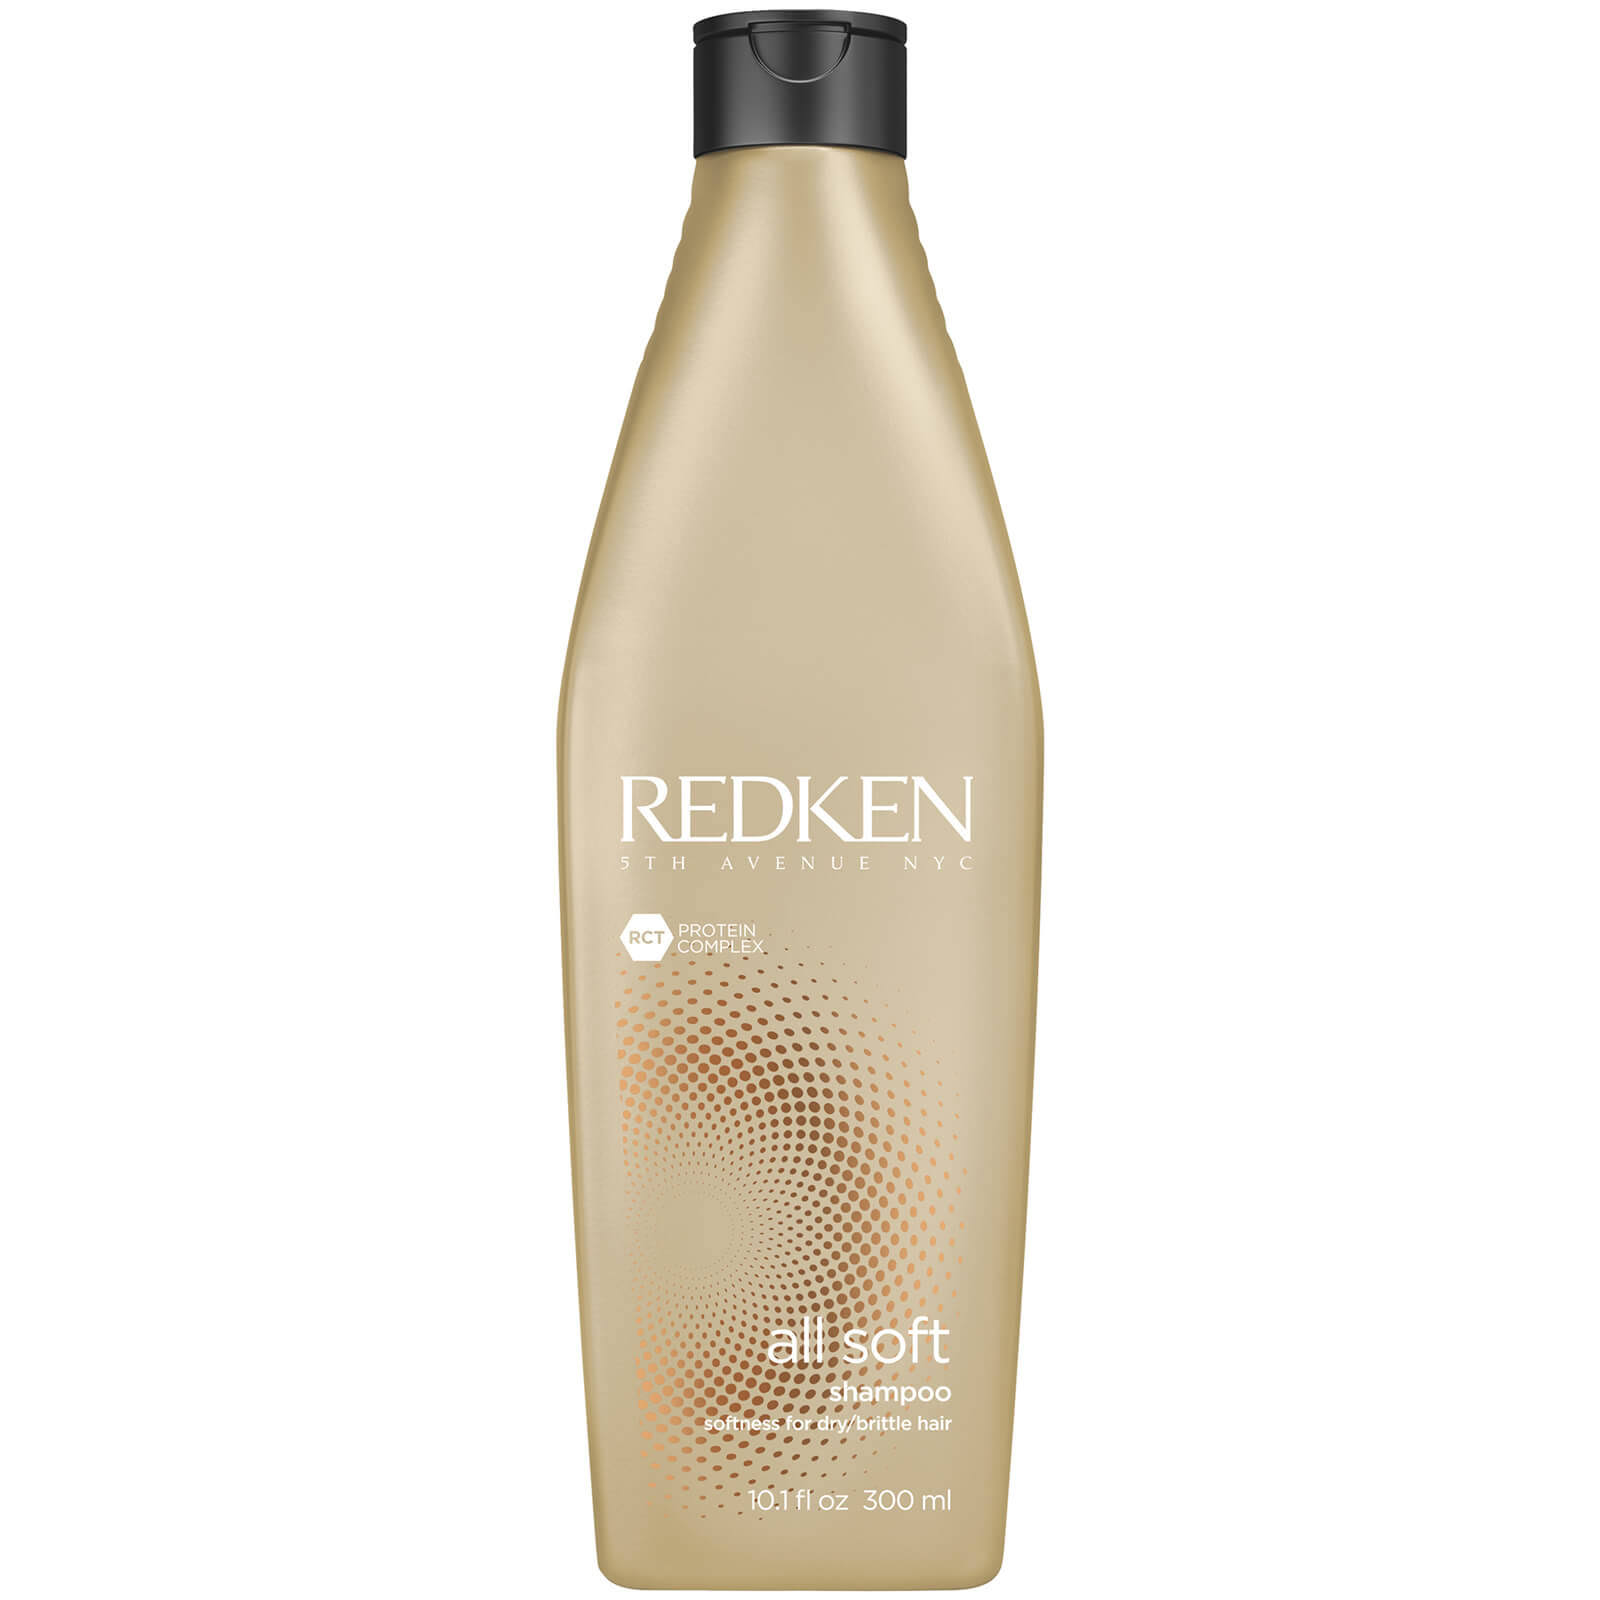 Redken All Soft Shampoo - 300ml